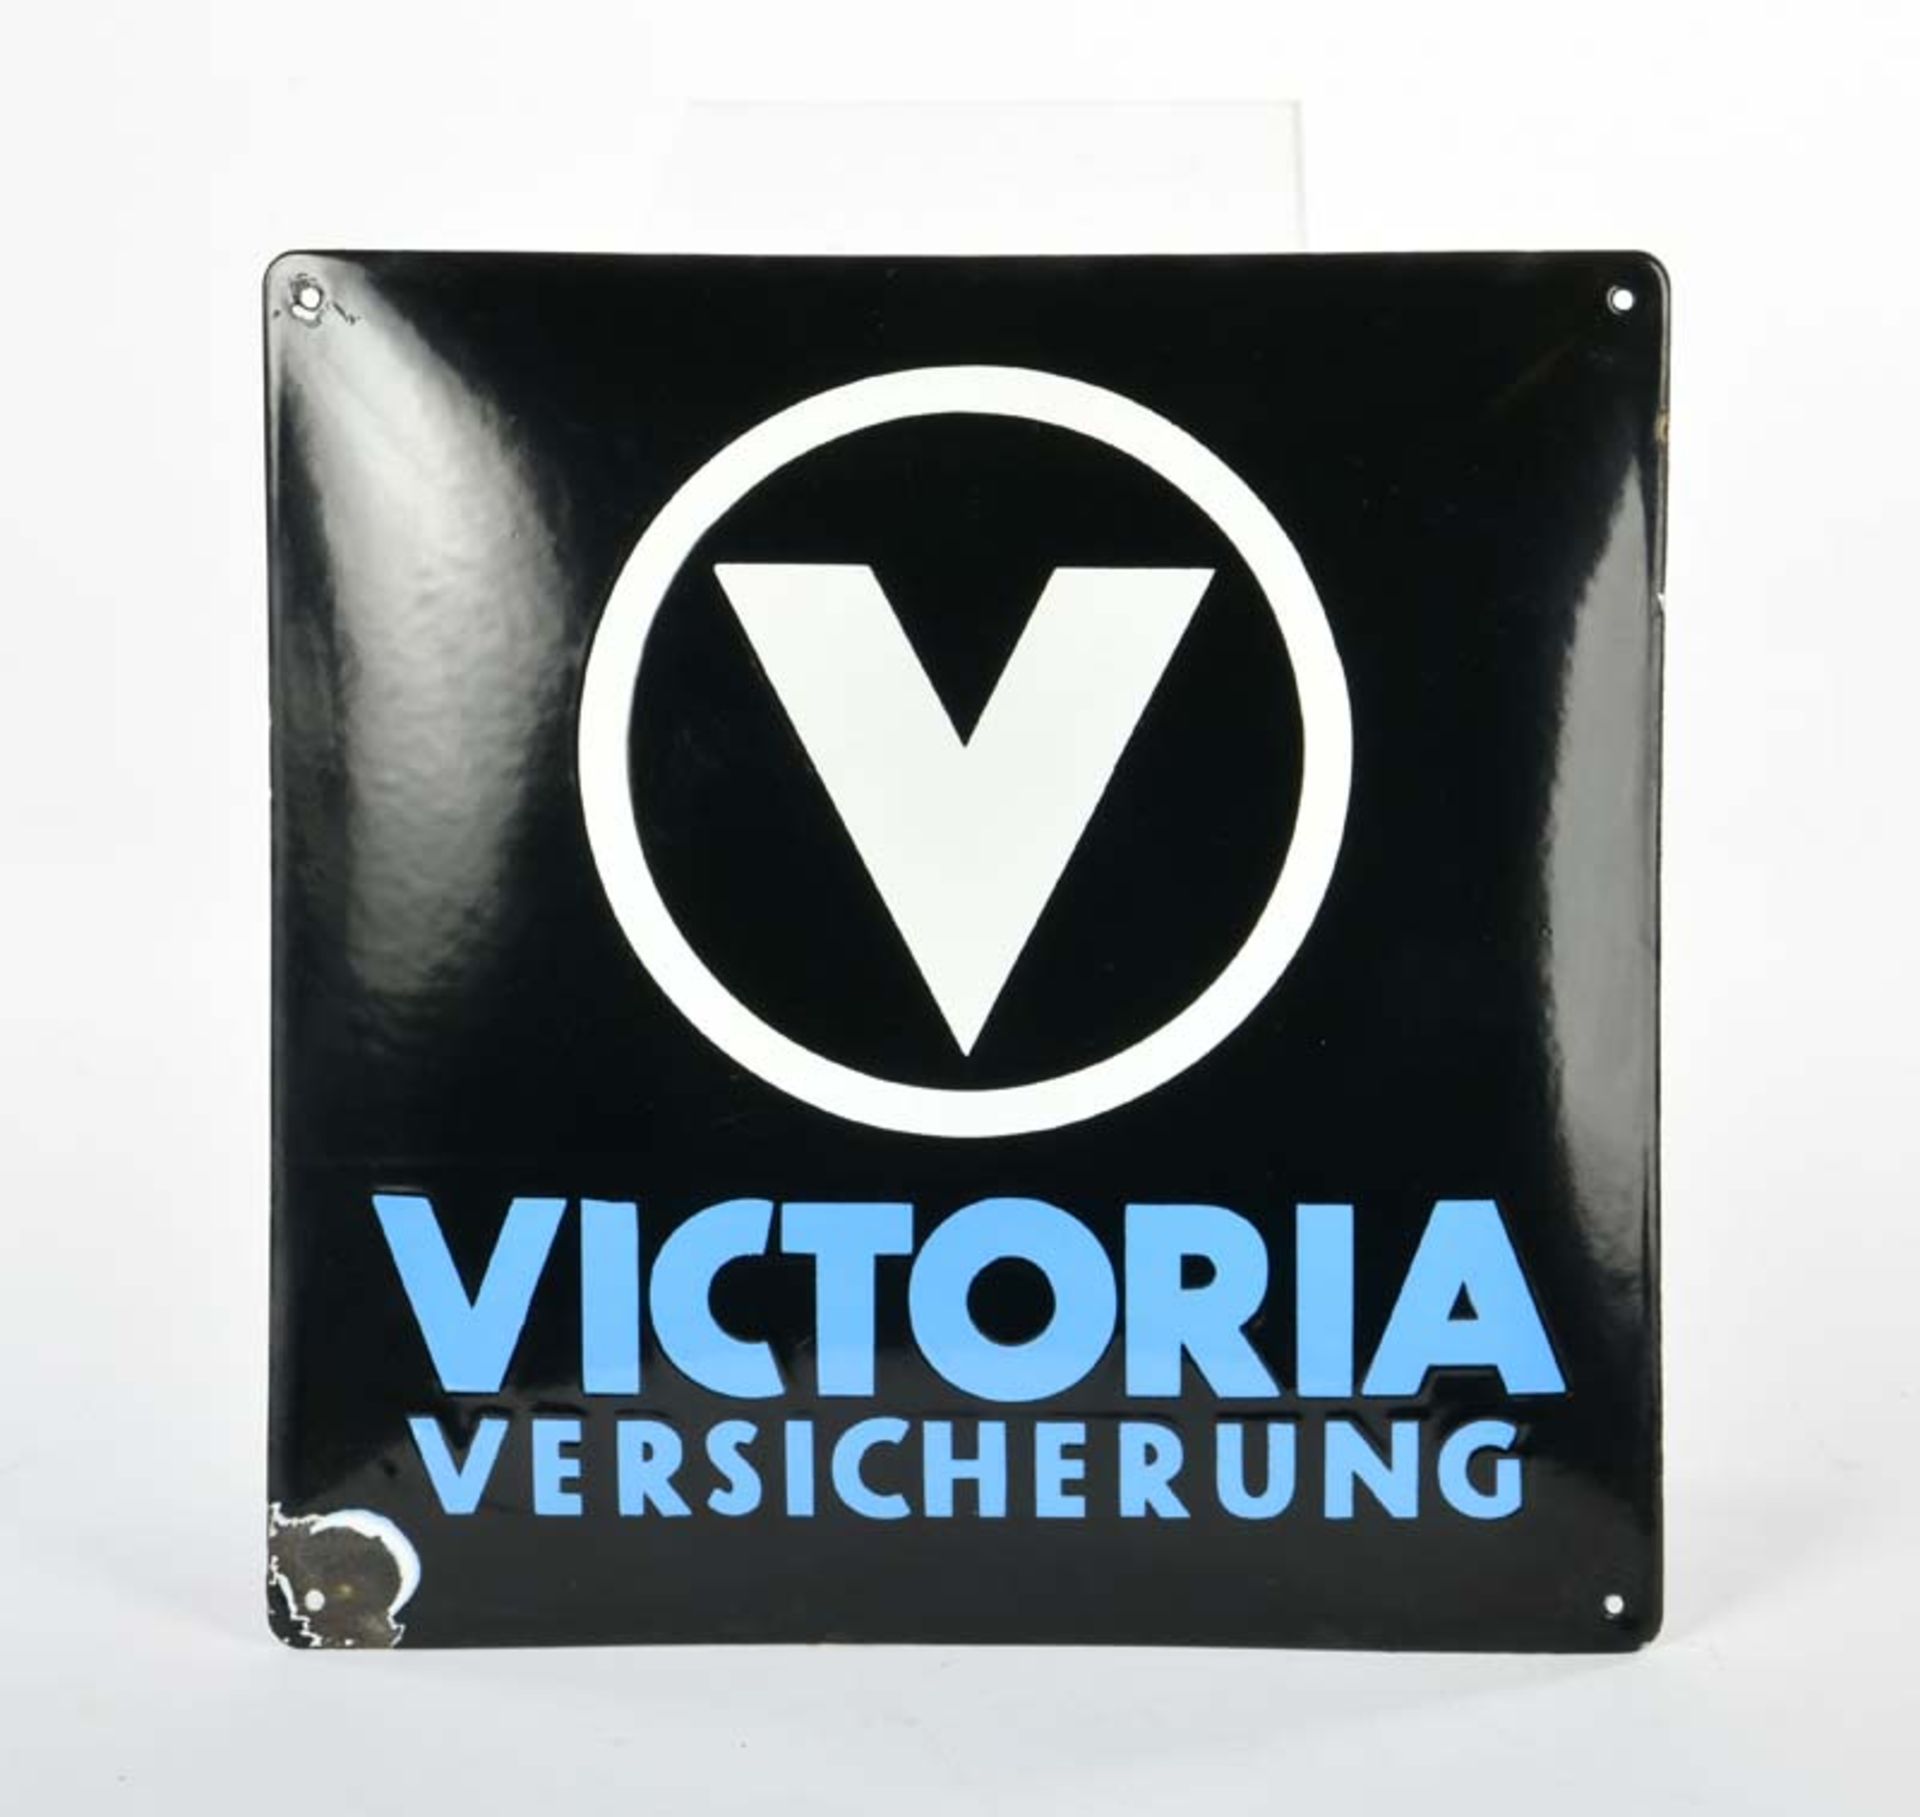 Enamel sign "Victoria Versicherung", 33x33 cm, min. paint d., convex